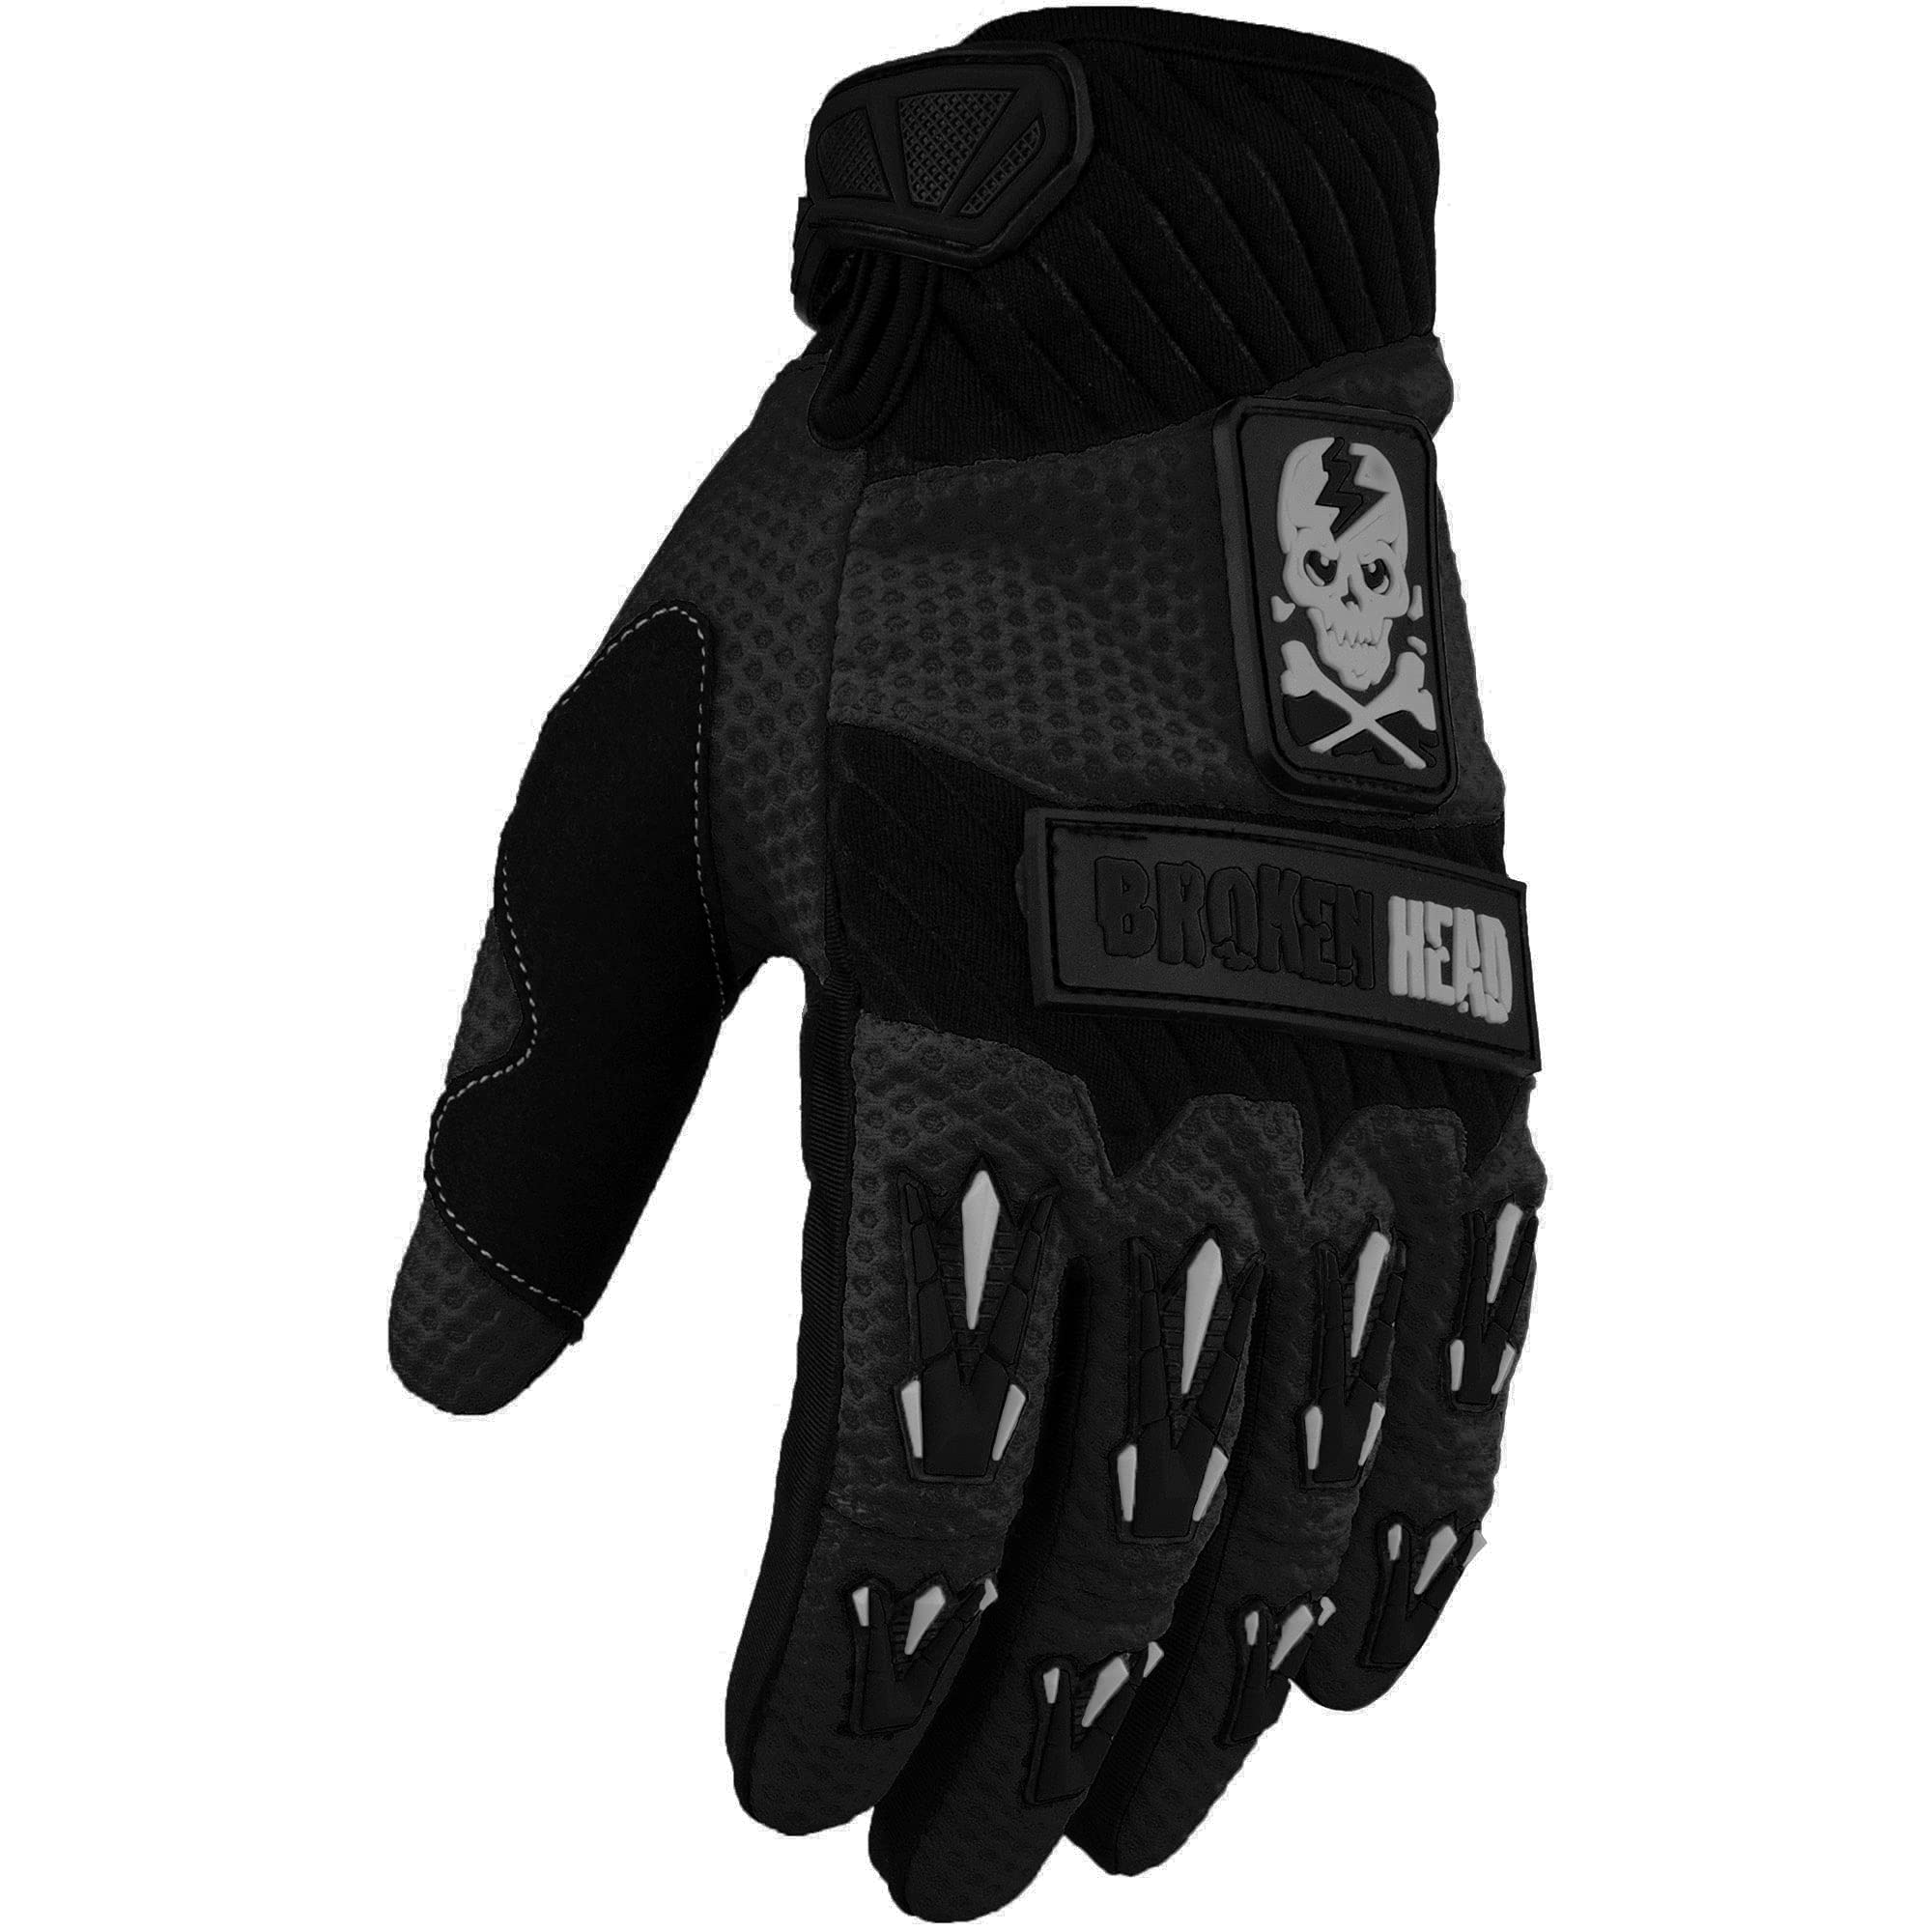 Broken Head MX-Handschuhe Faustschlag - Motorrad-Handschuhe Für Motocross, Enduro, Mountainbike - Schwarz (M)